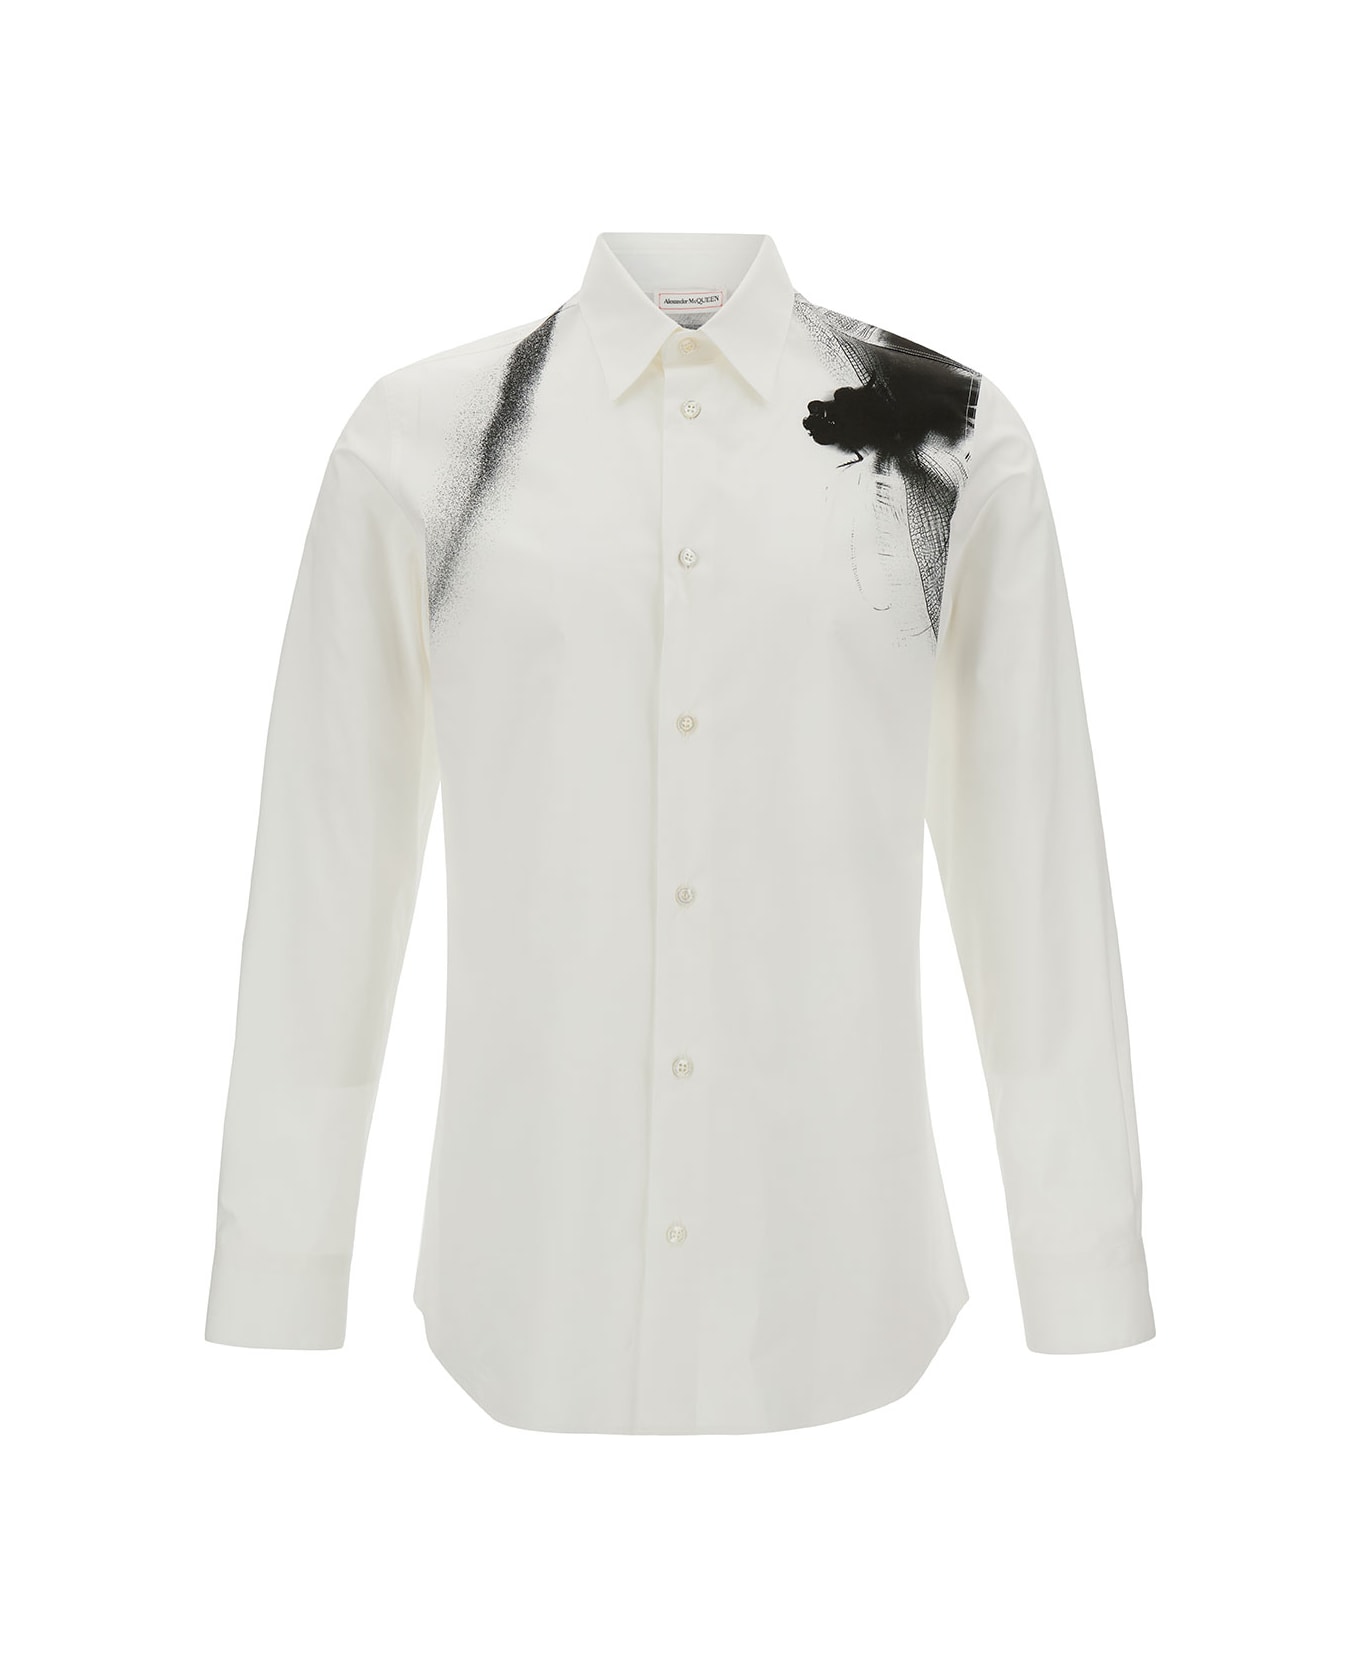 Alexander McQueen White Shirt With Contrasting Print In Cotton Man - WHITEBLACK シャツ